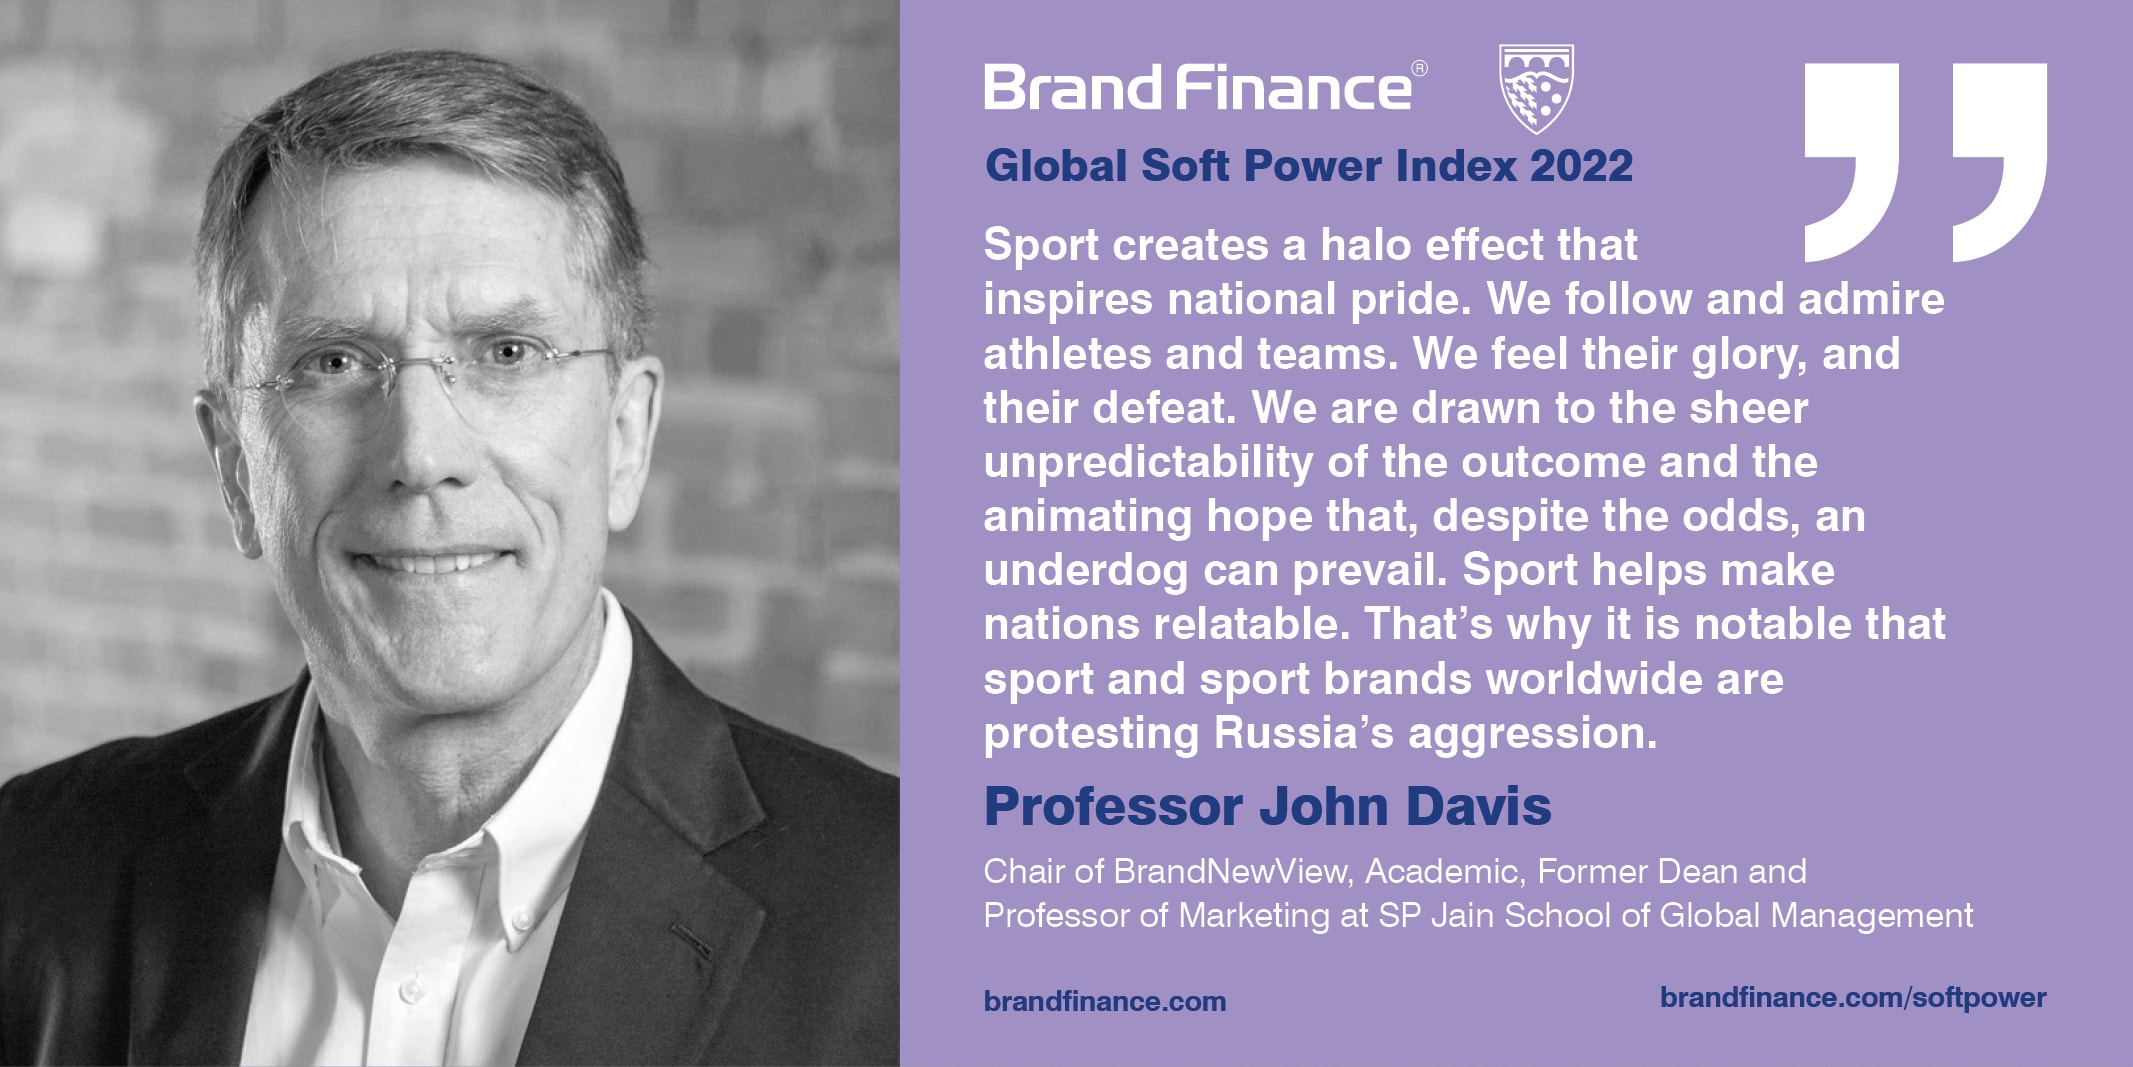 Professor John Davis, Chair of BrandNewView, Academic, Former Dean and Professor of Marketing at SP Jain School of Global Management